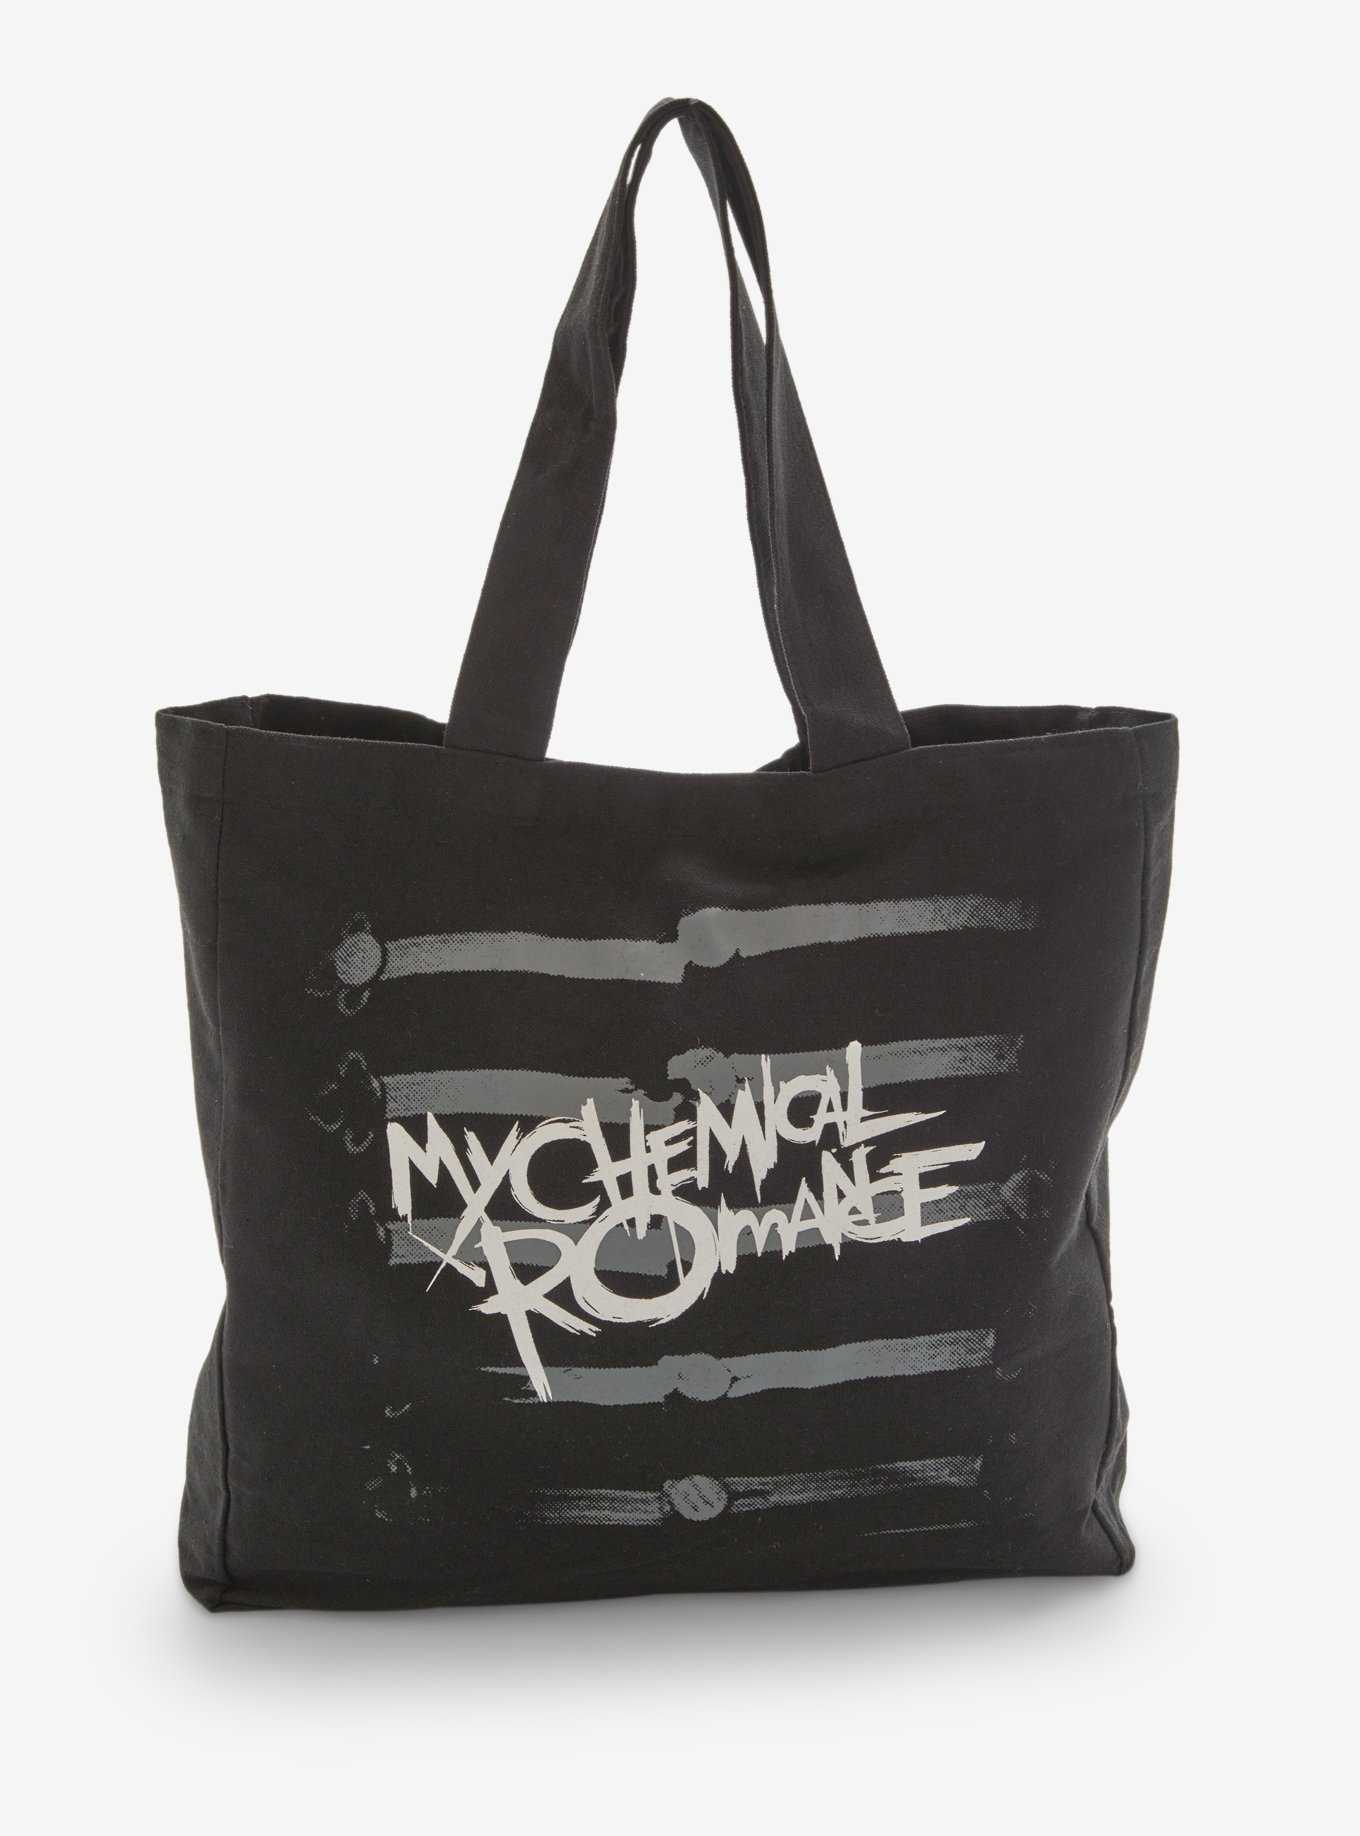 My Chemical Romance Black Parade Canvas Tote Bag, , hi-res